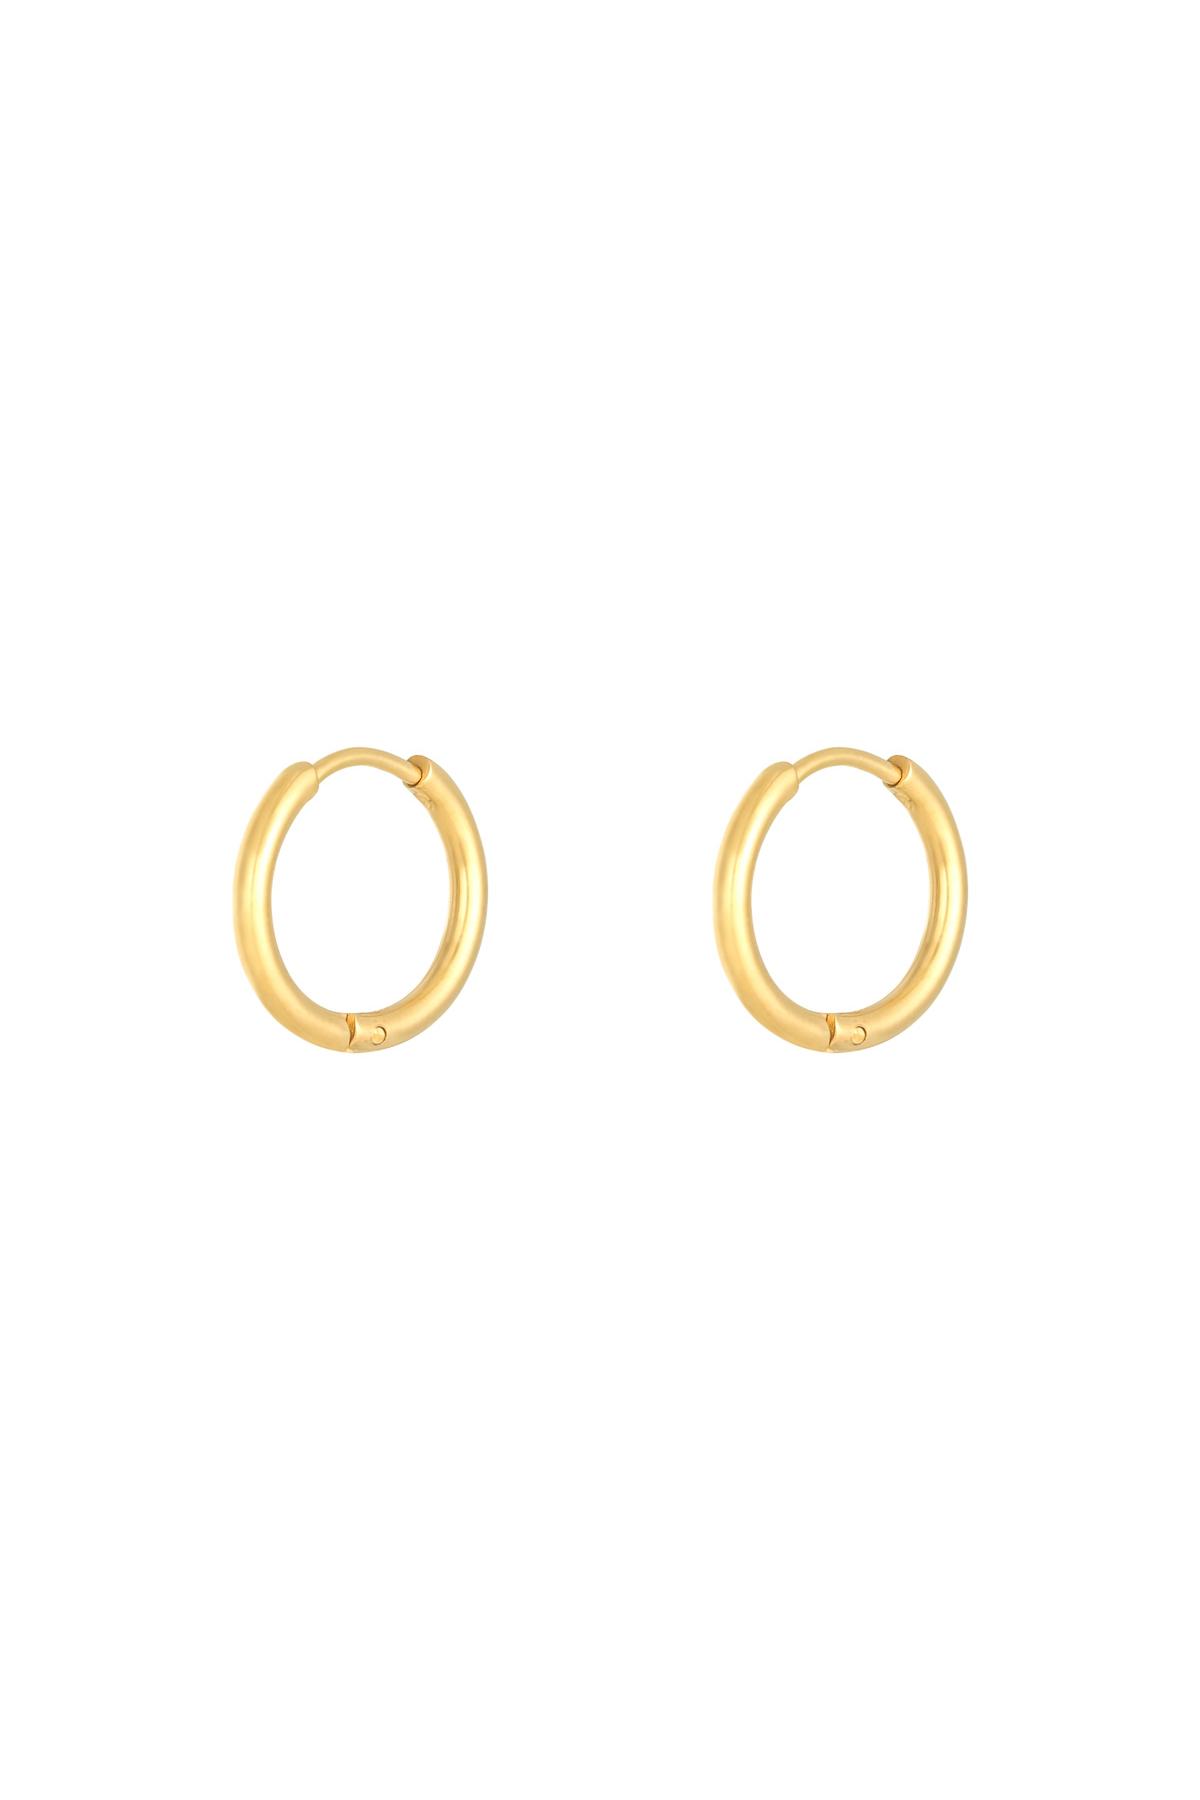 Earrings Little Hoops 1,6cm Gold Stainless Steel h5 